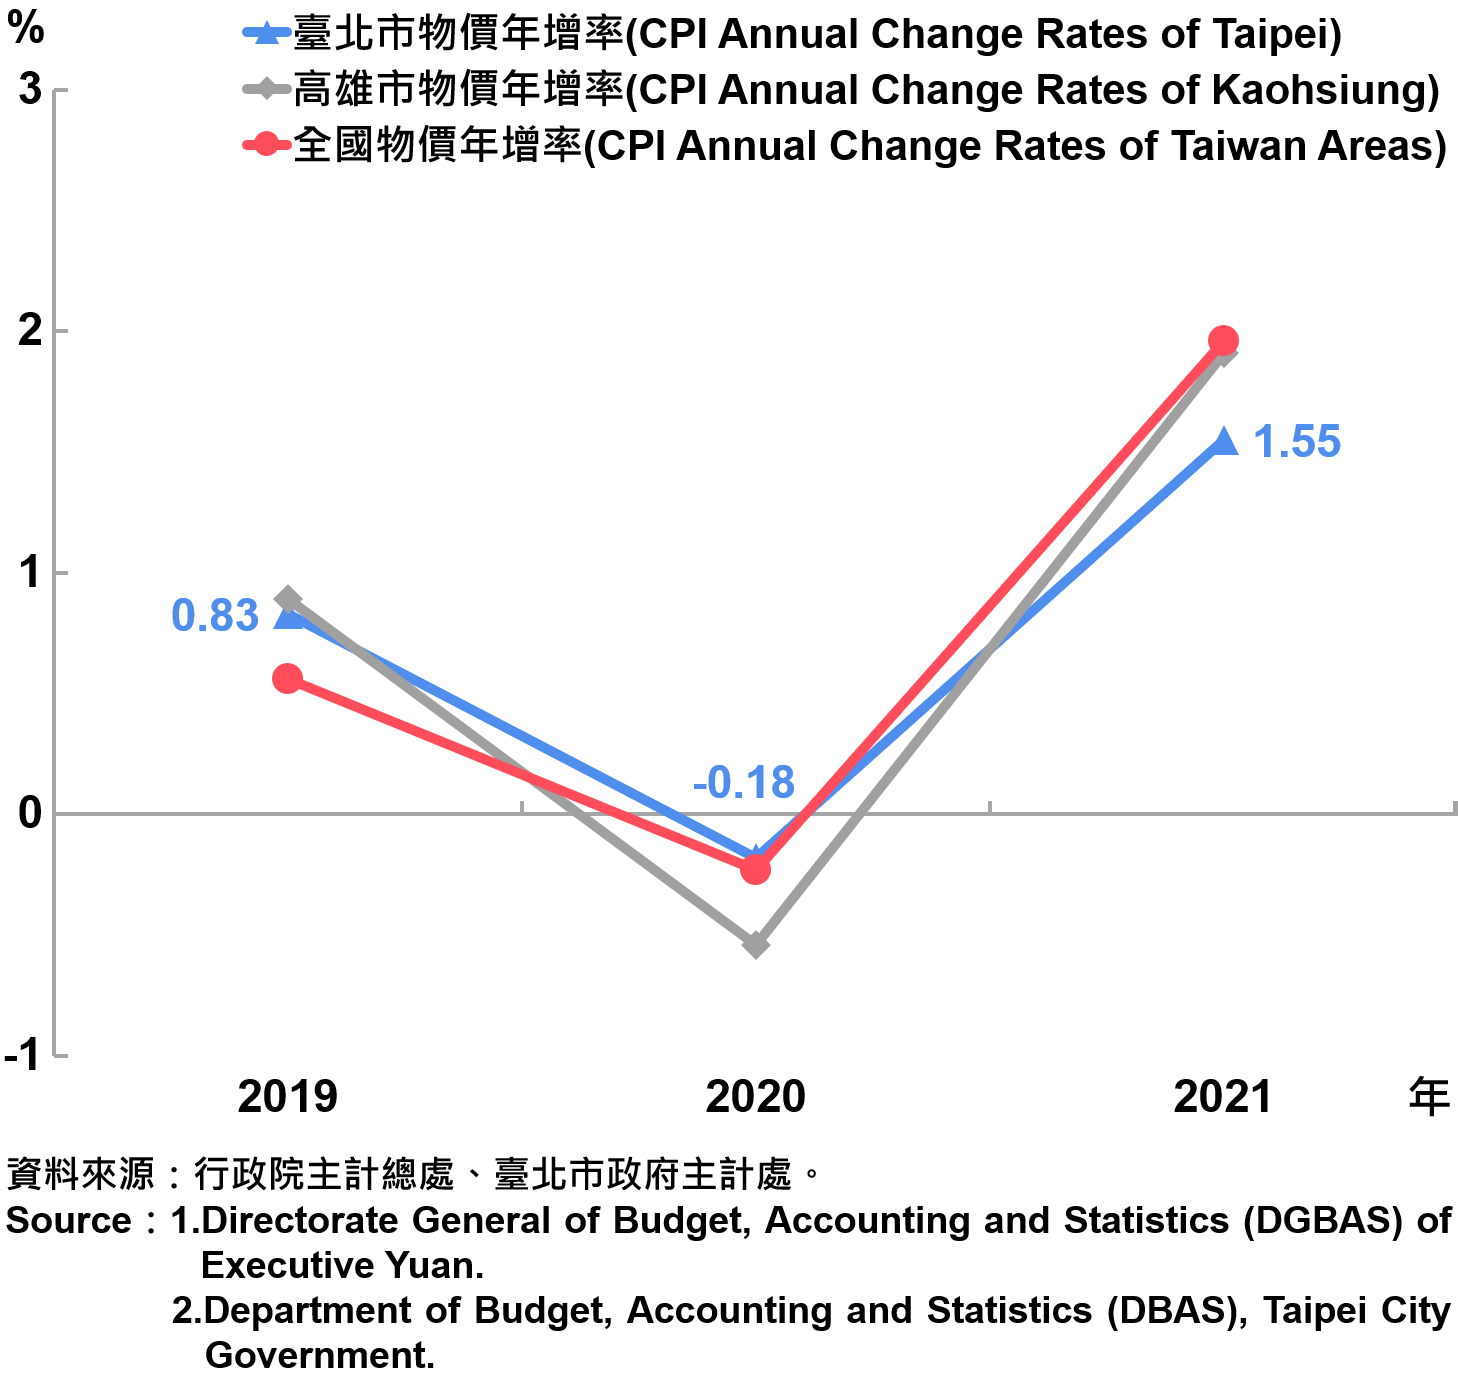 臺北市消費者物價指數（CPI）年增率—2021 Annual Growth Rate of CPI in Taipei City—2021